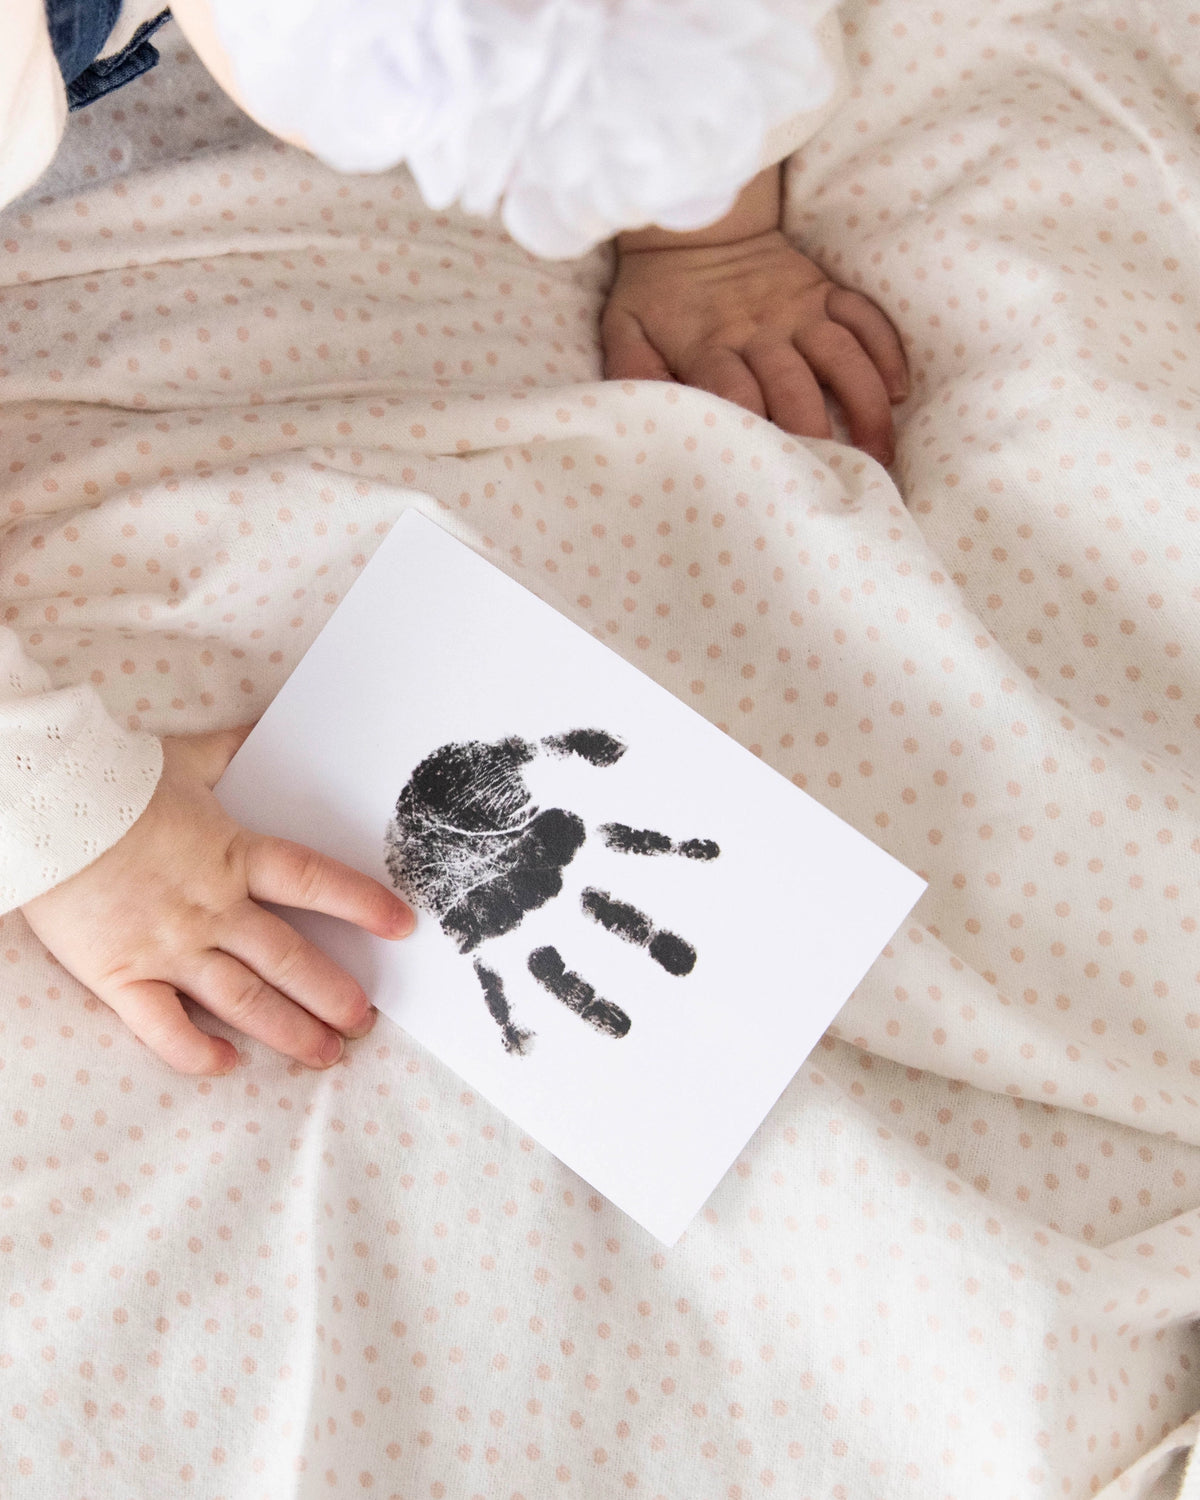 Baby Handprint or Footprint Kit